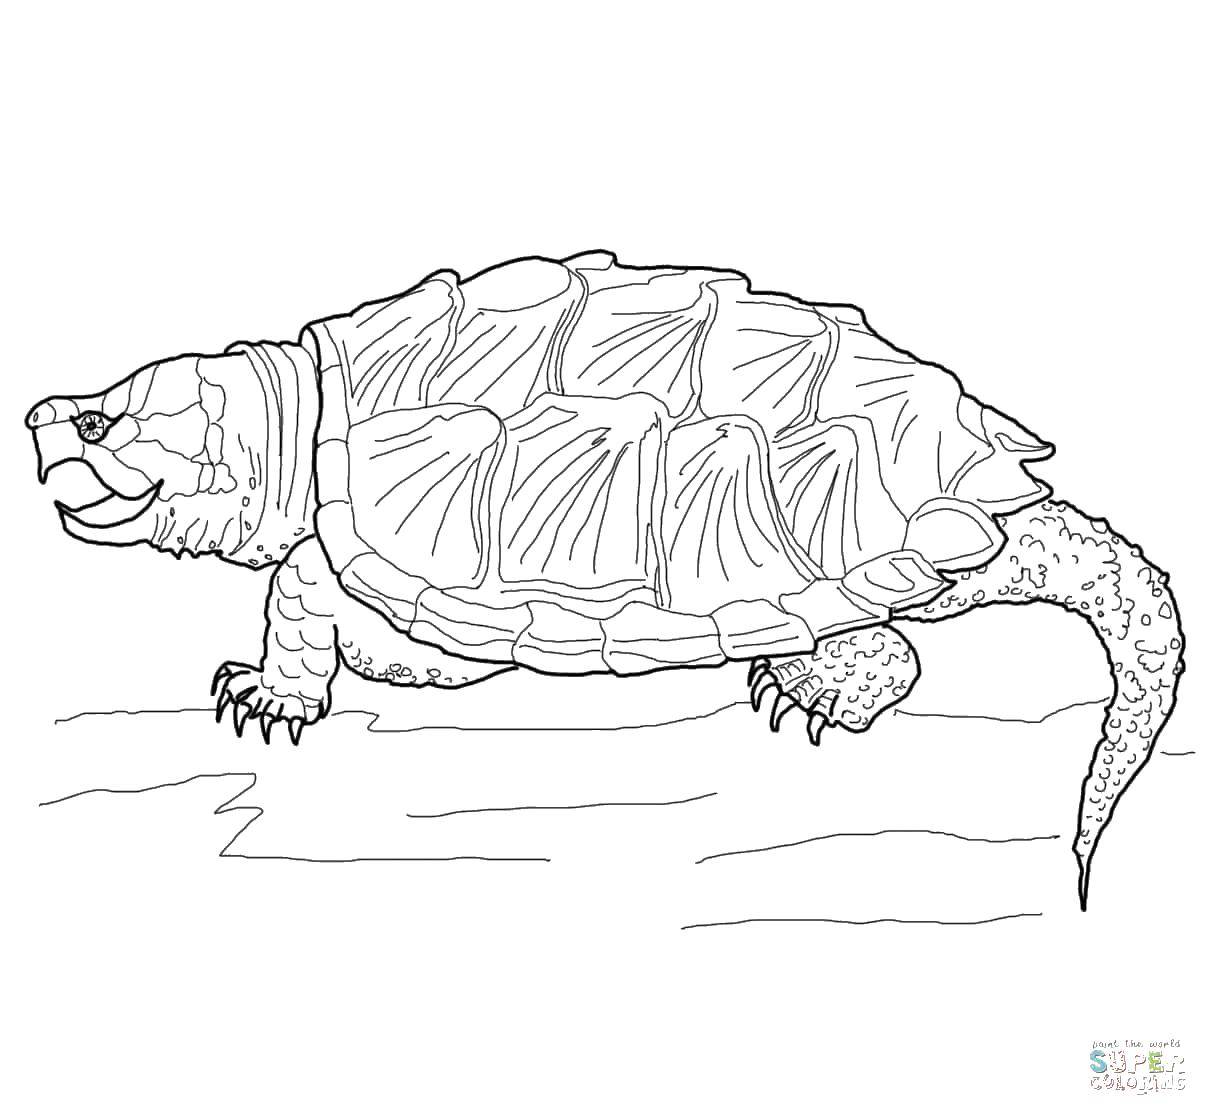 Название: Раскраска Страшная черепаха. Категория: черепашки ниндзя. Теги: Рептилия, черепаха.